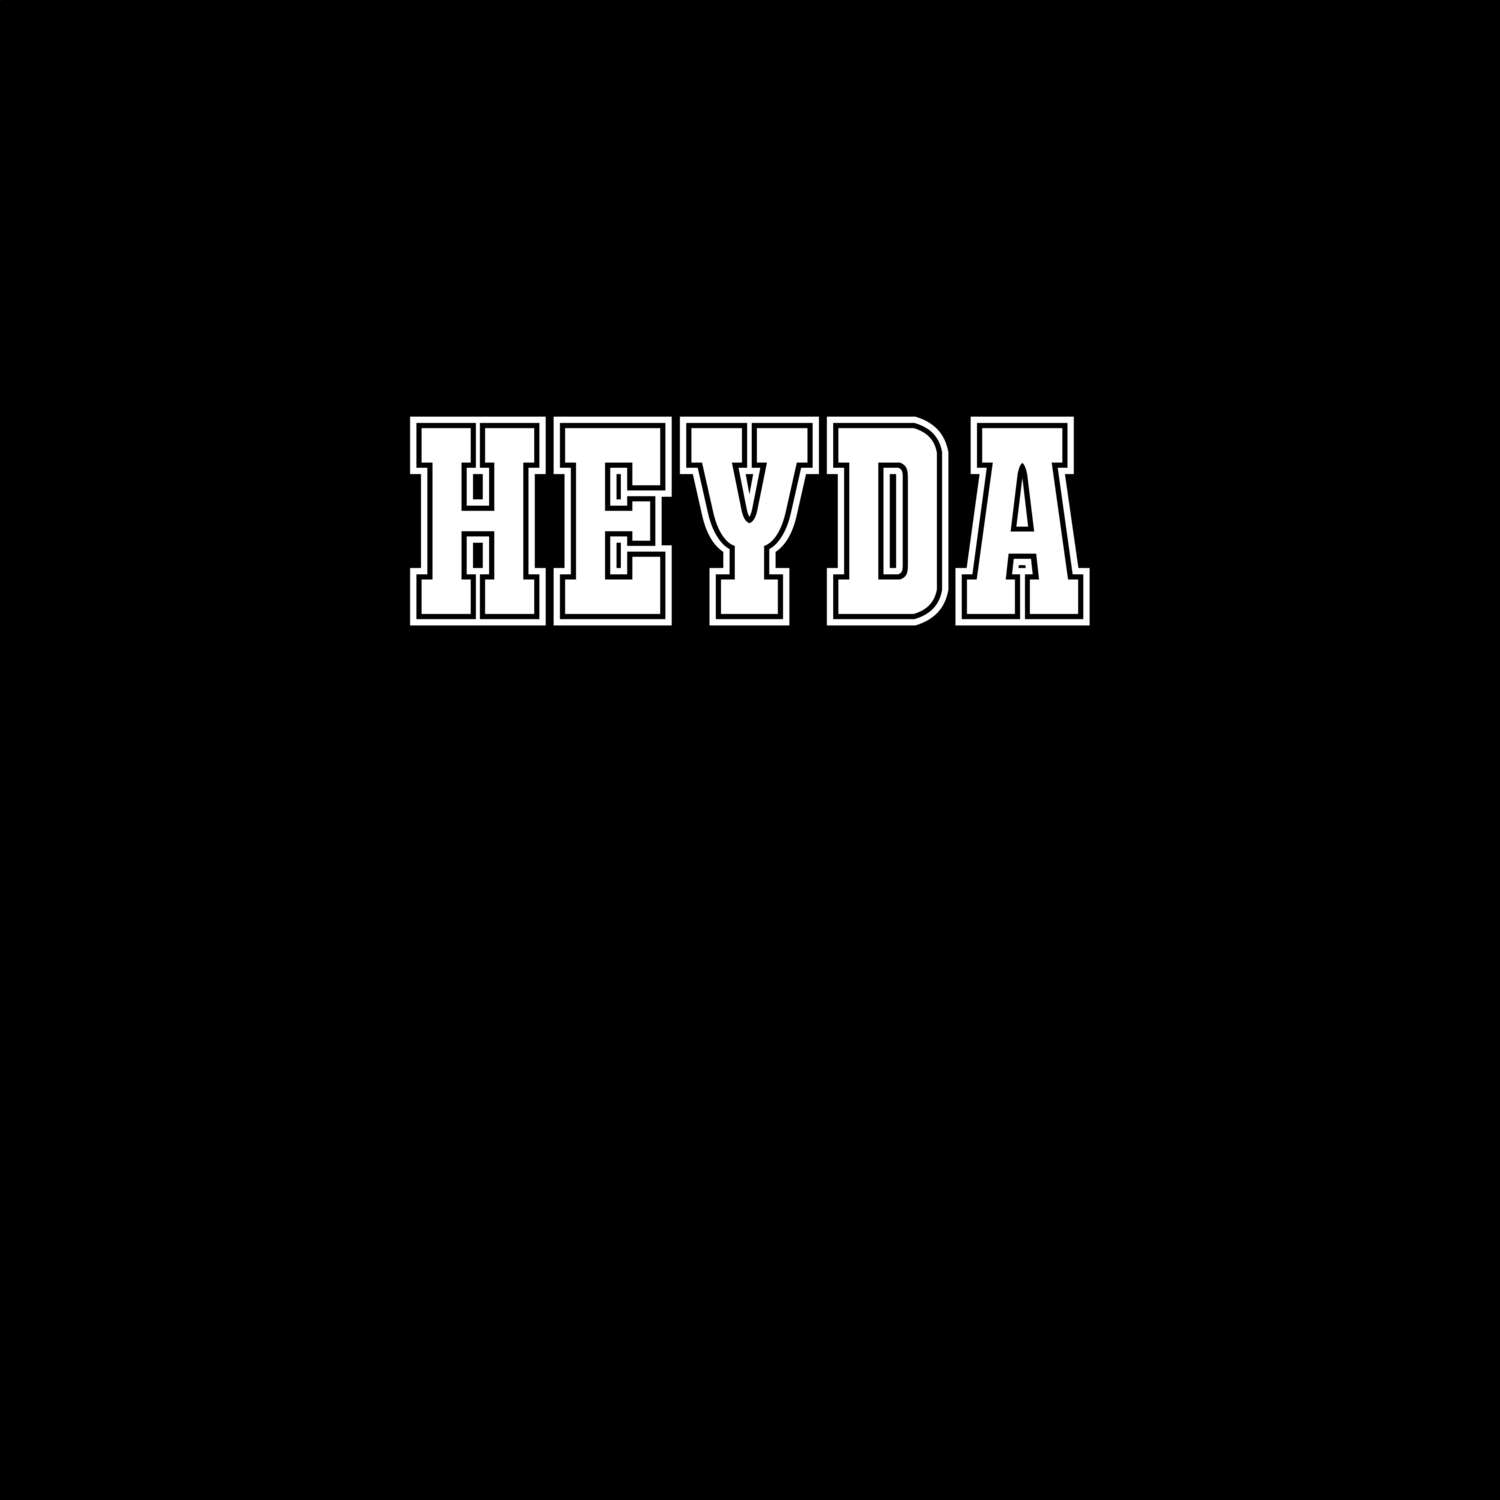 Heyda T-Shirt »Classic«